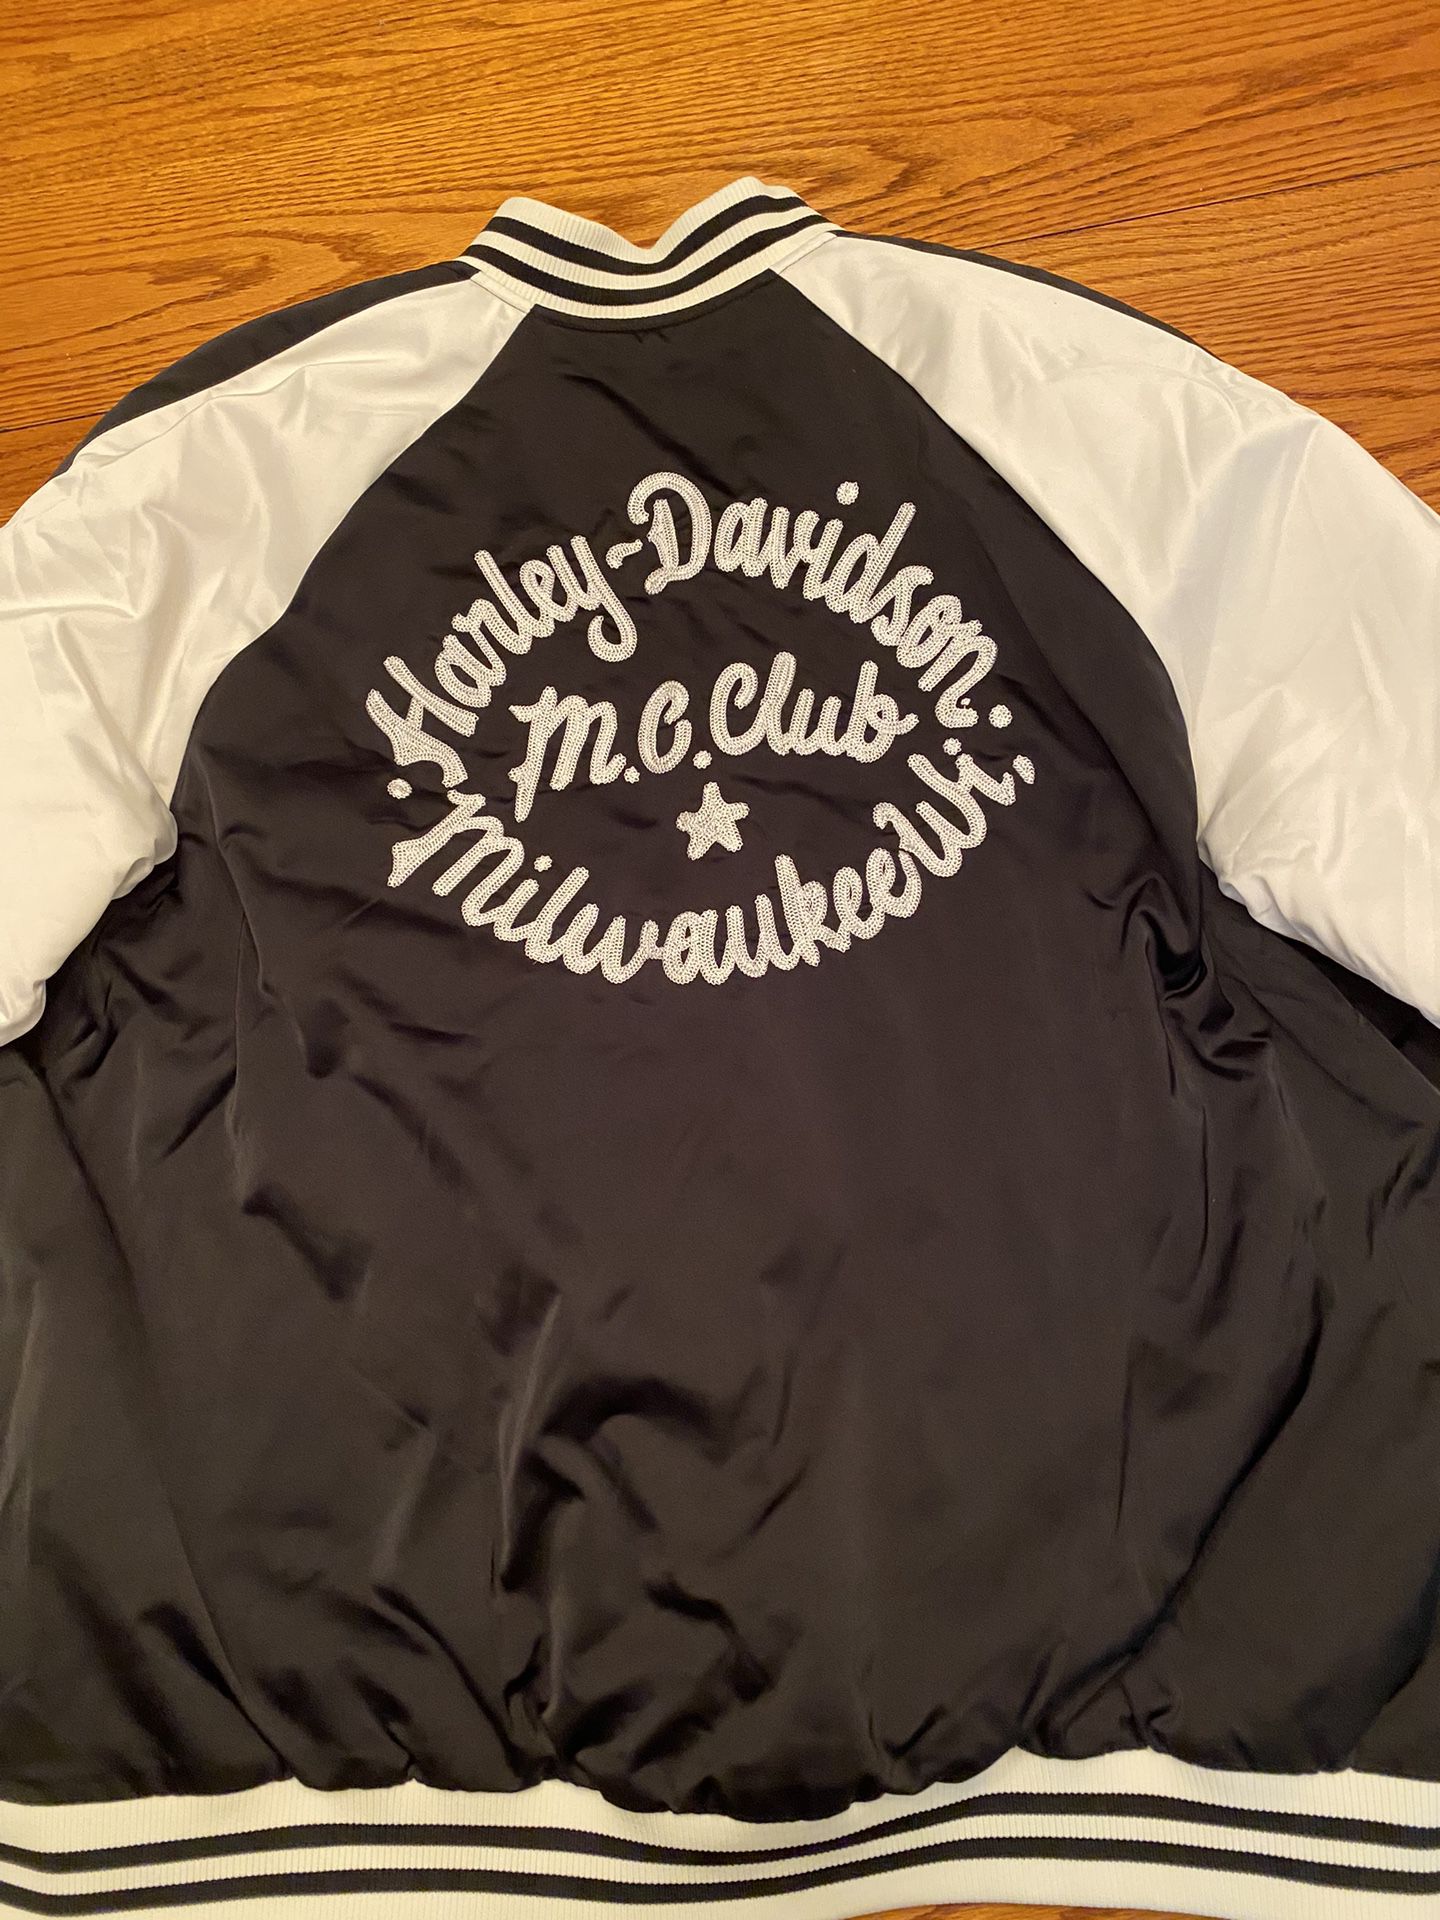 Brand New Never worn Authentic Harley Davison Jacket Men’s Size 3x